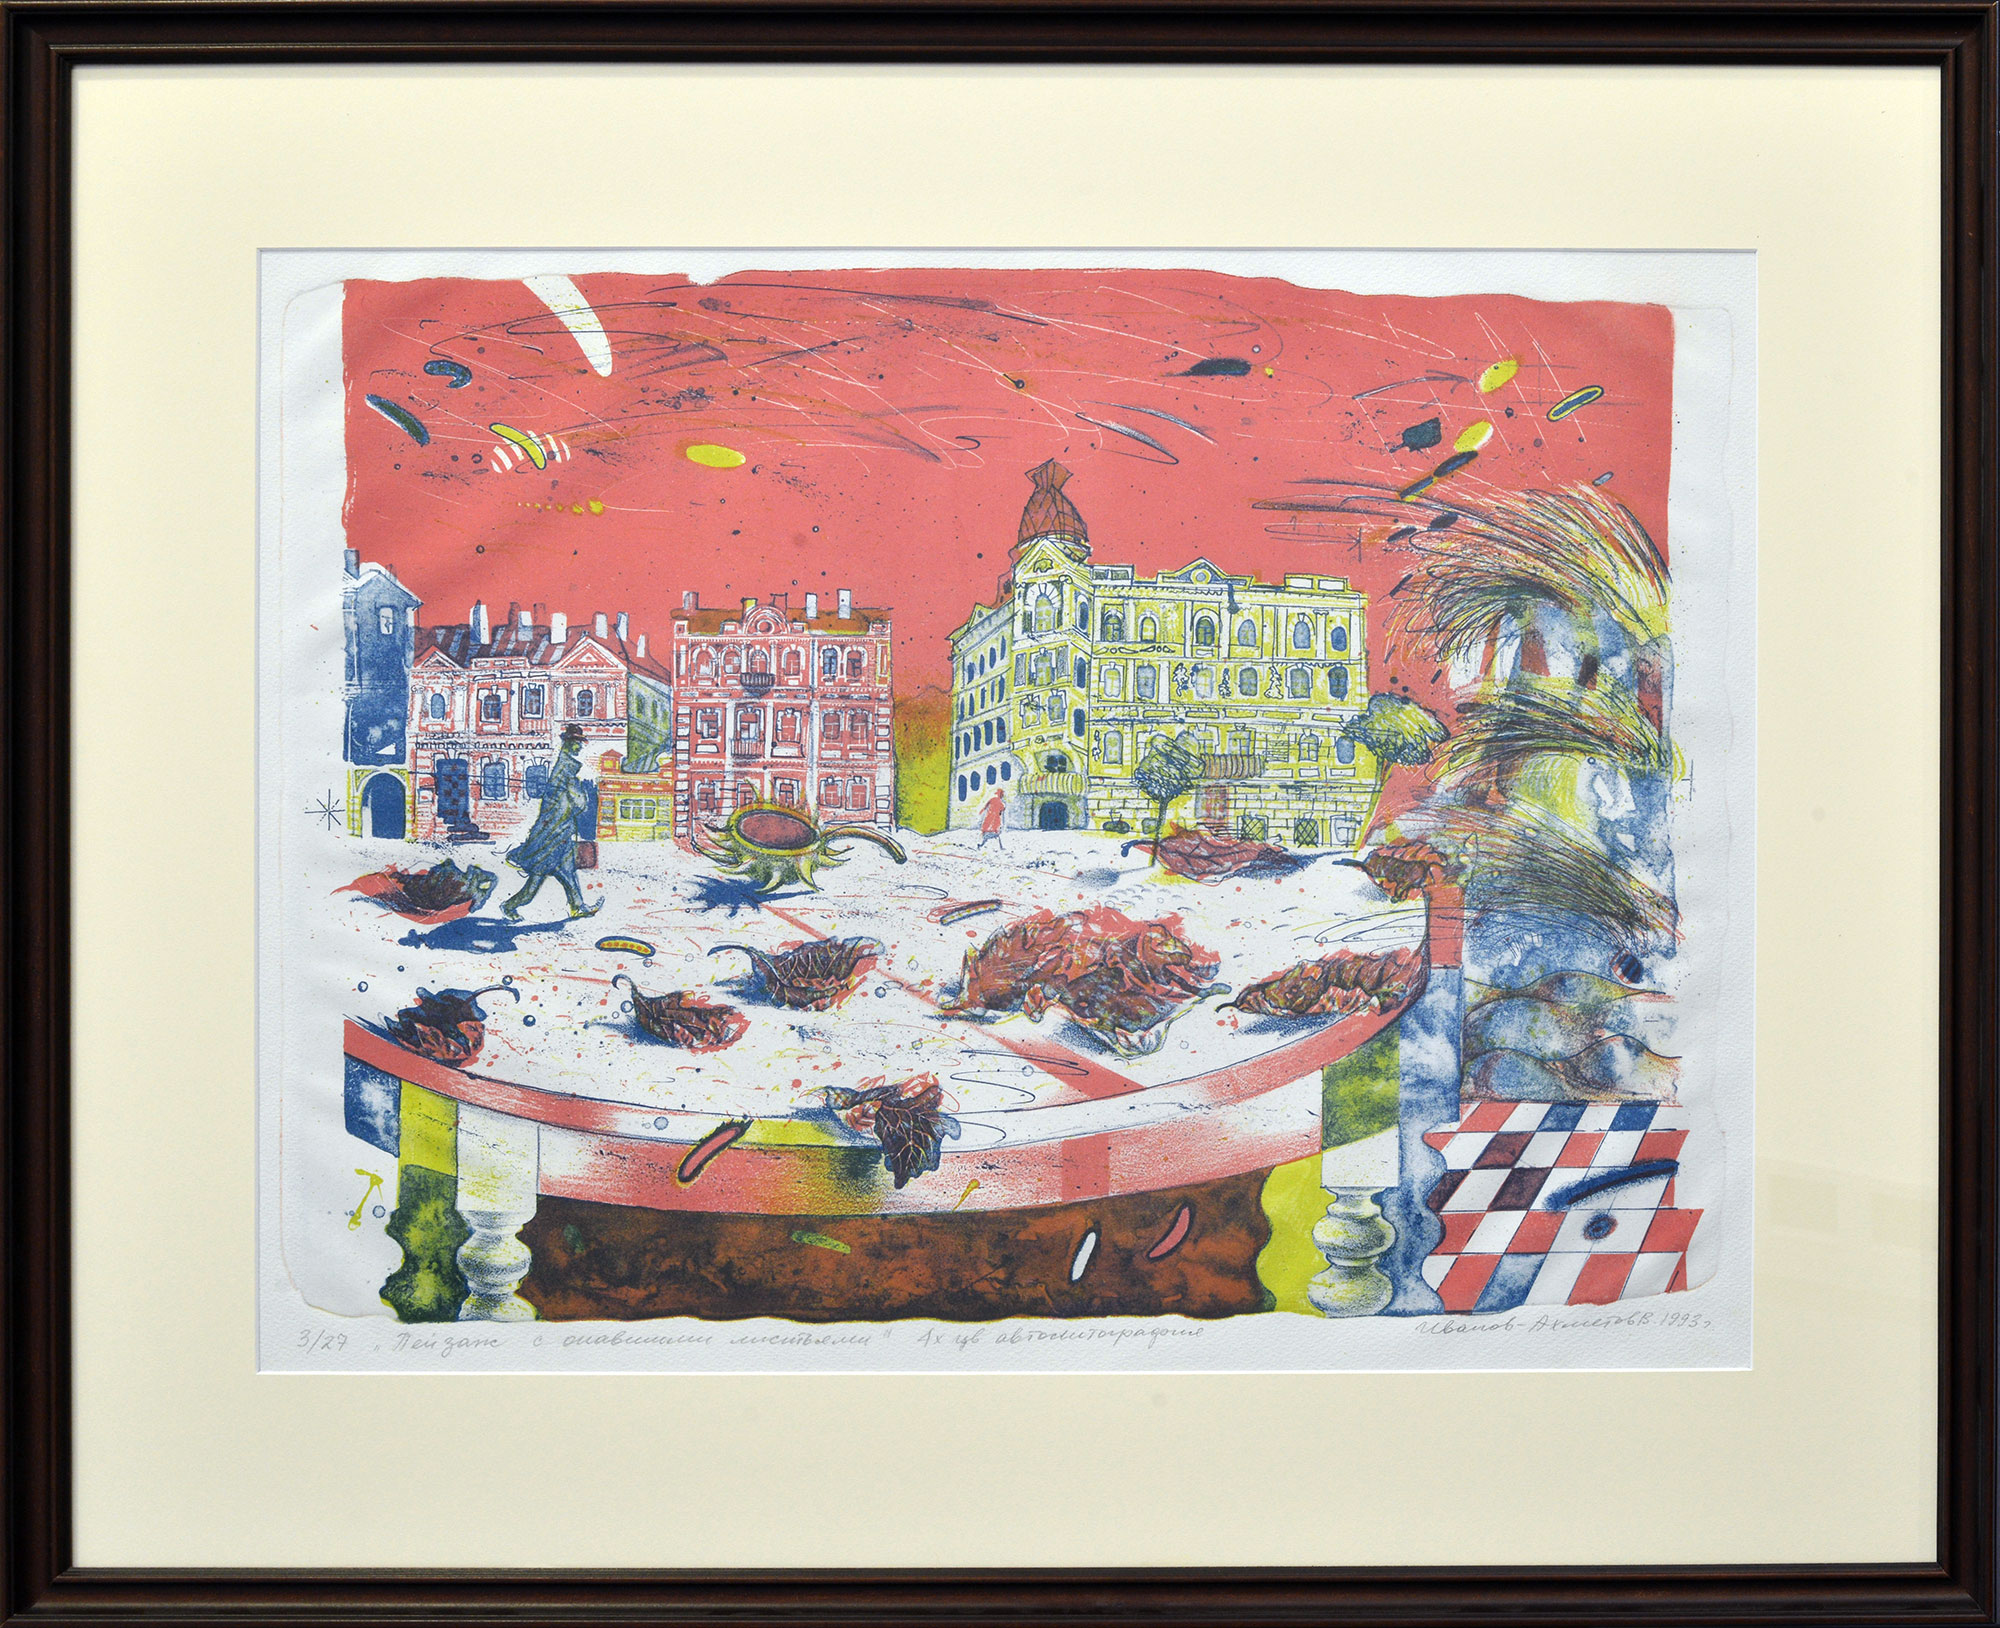 "Landscape with fallen leaves", 1993 - 1